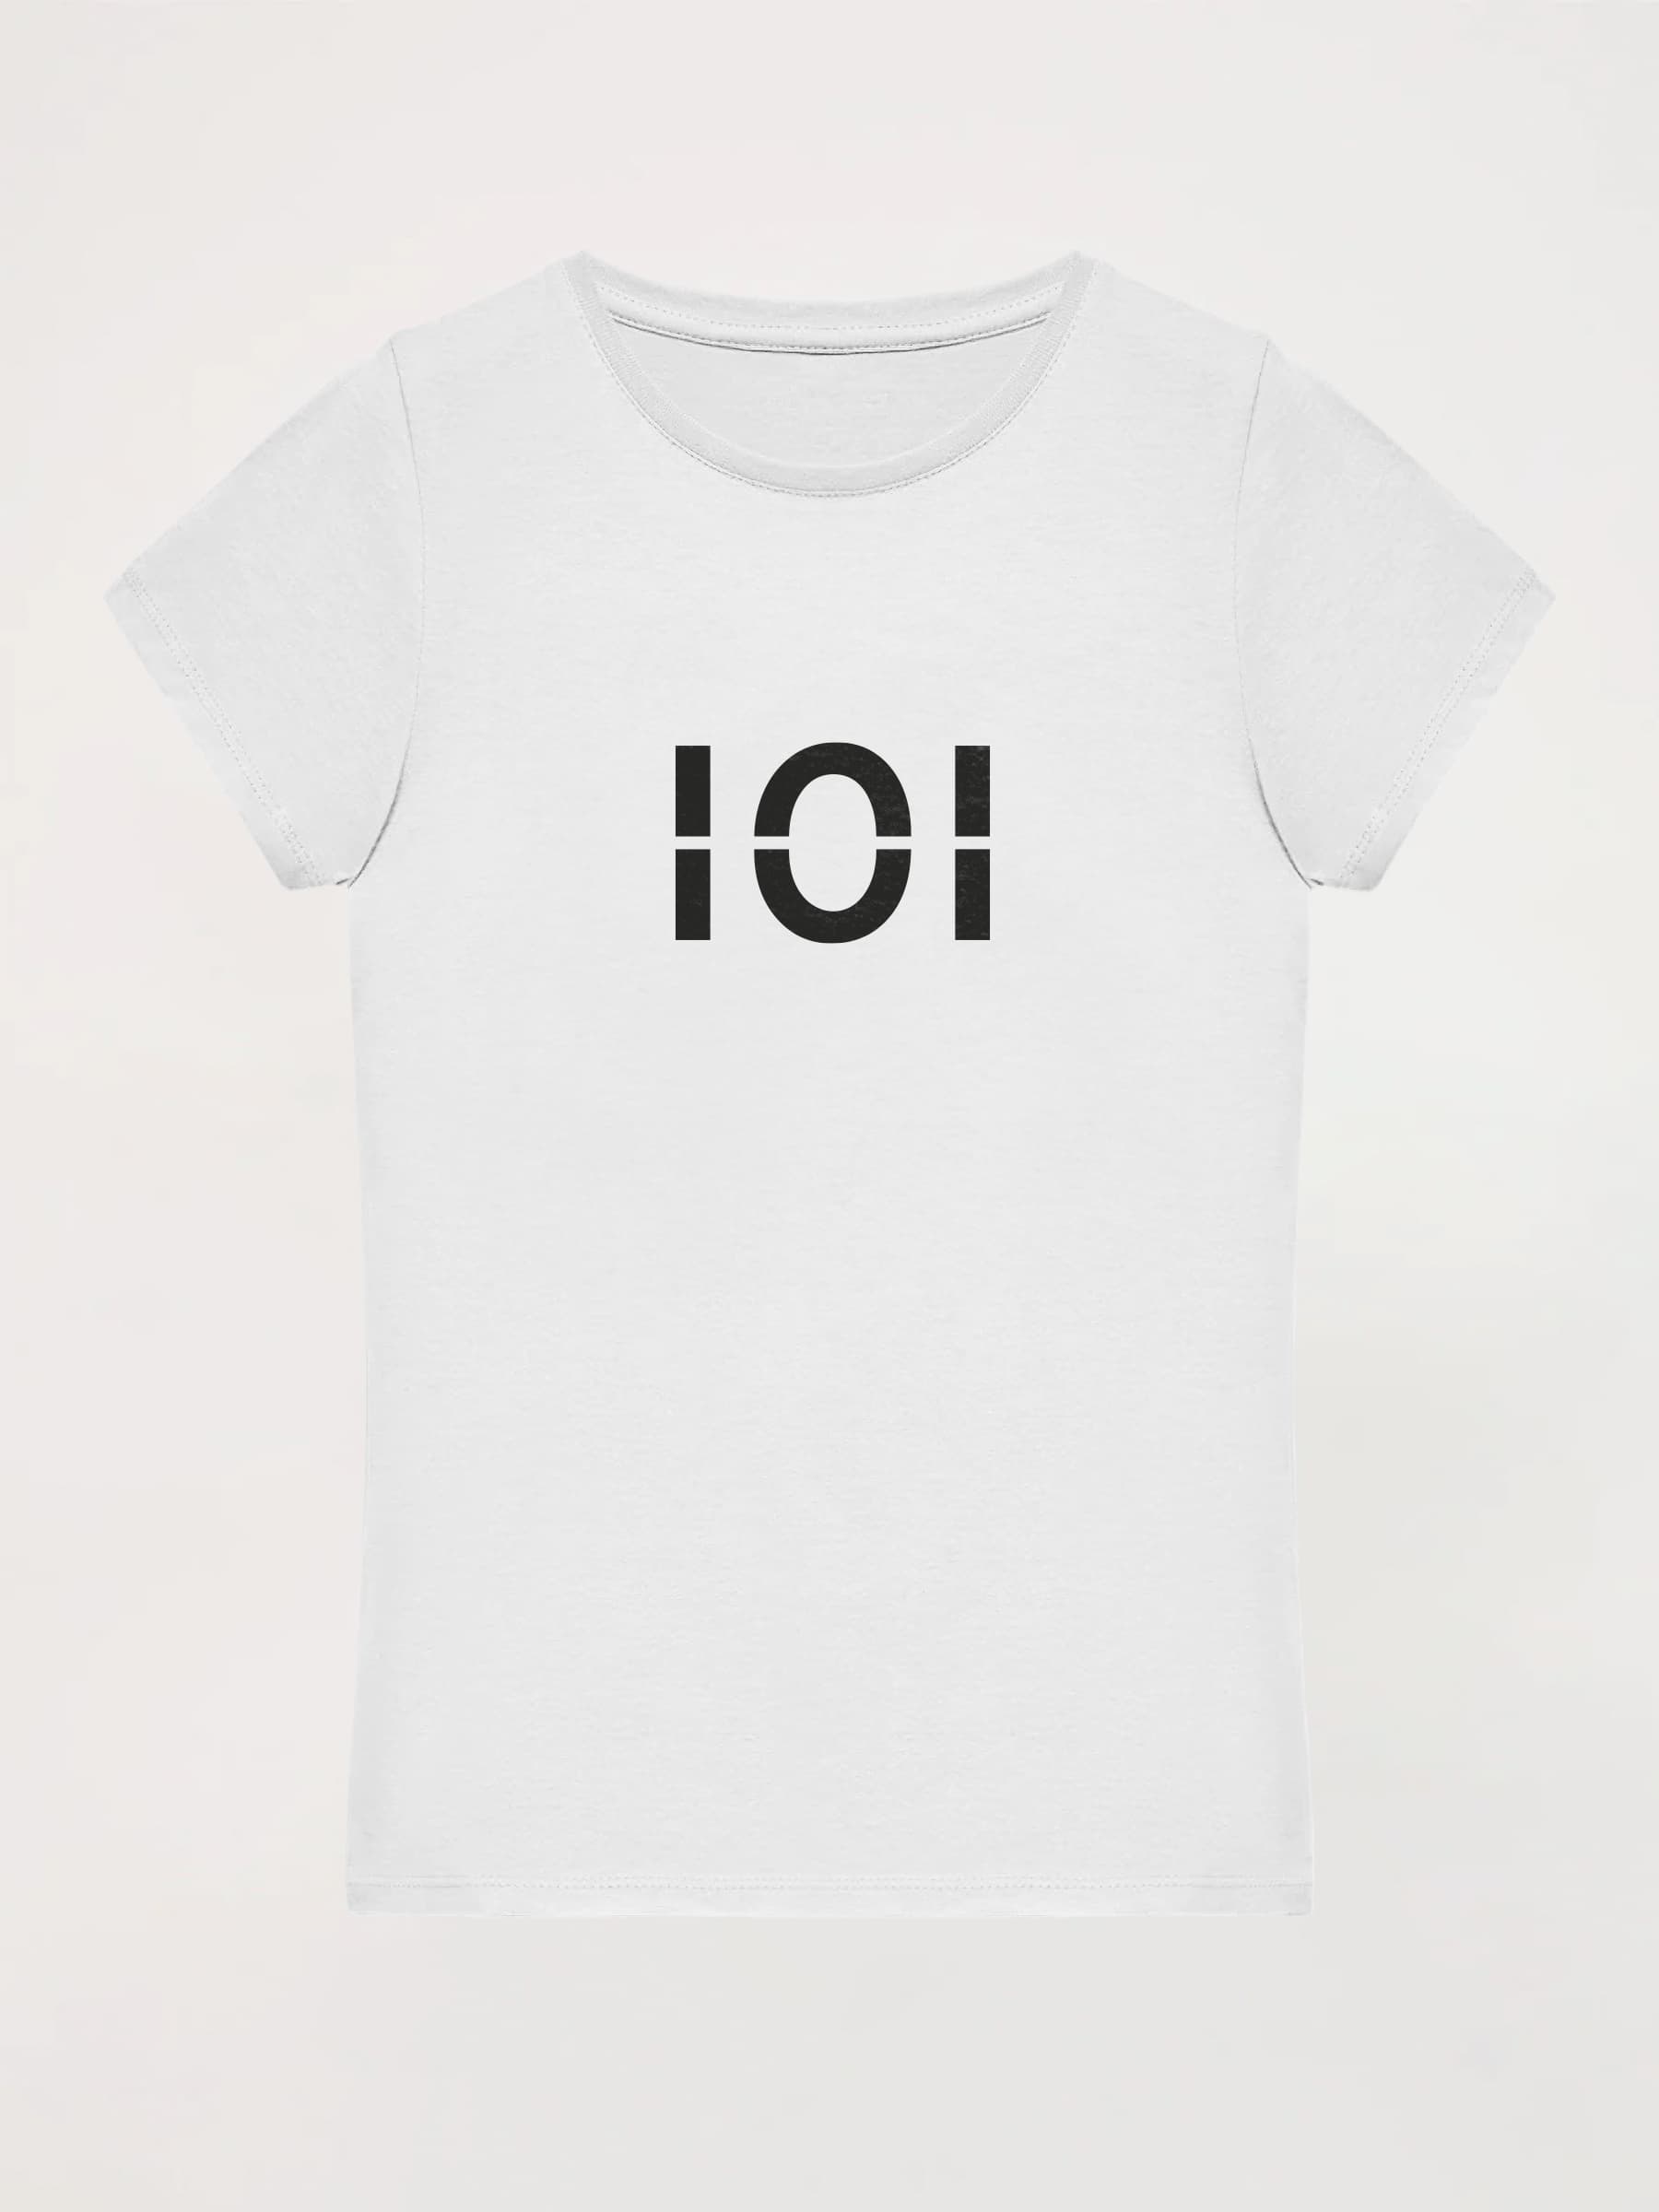 Camiseta mujer 101